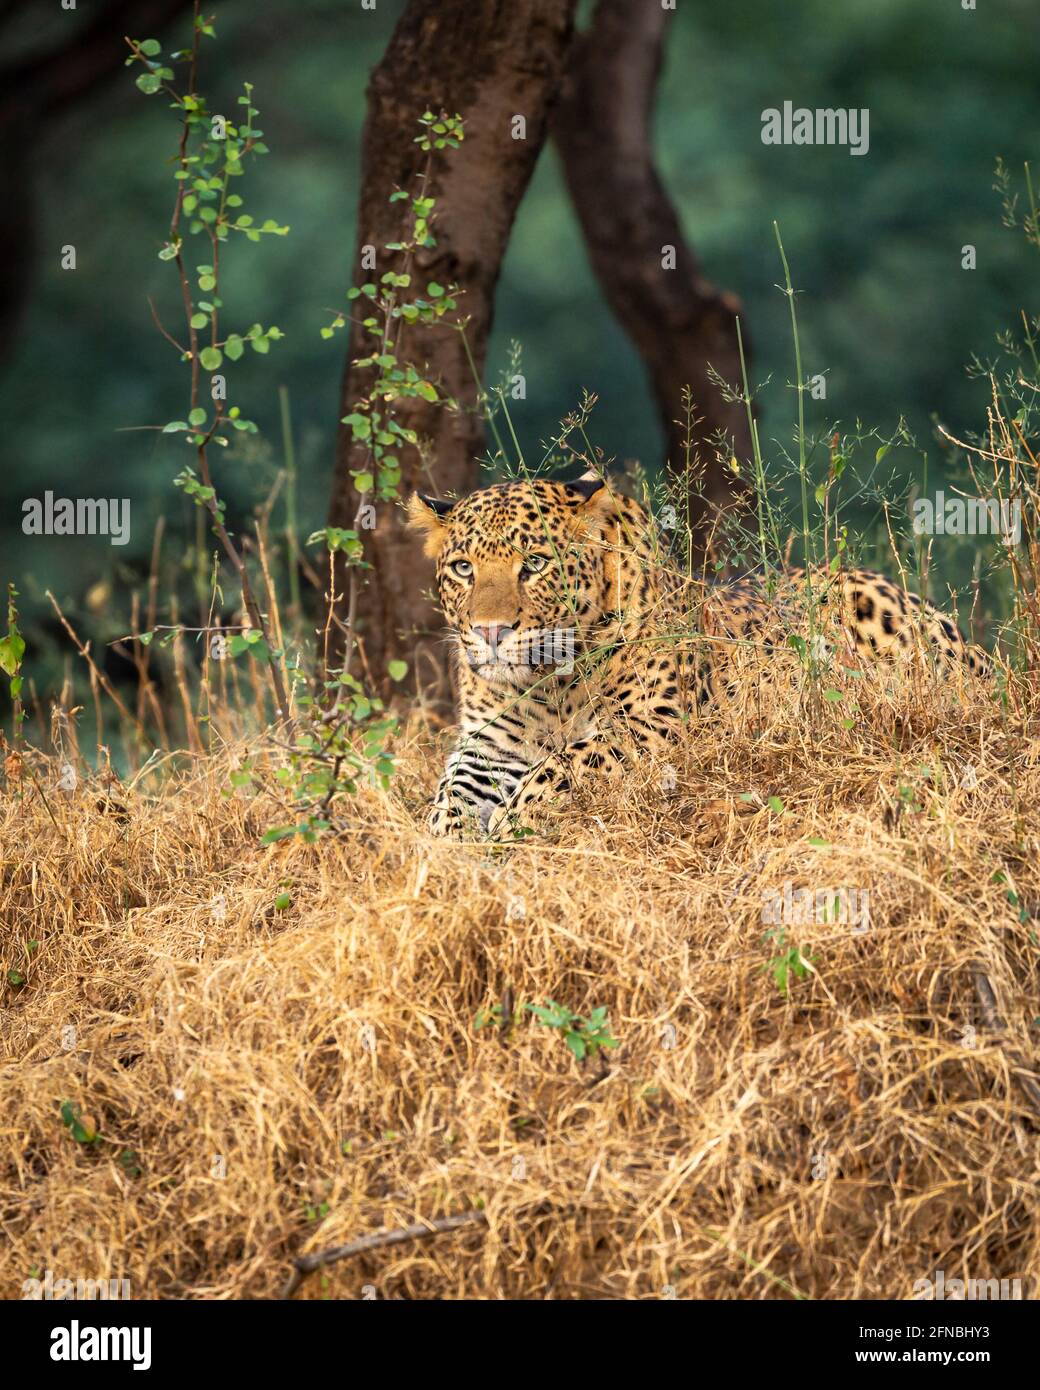 Ritratto di leopardo maschile selvatico o pantera nella riserva forestale jhalana jaipur rajasthan india - panthera pardus fusca Foto Stock